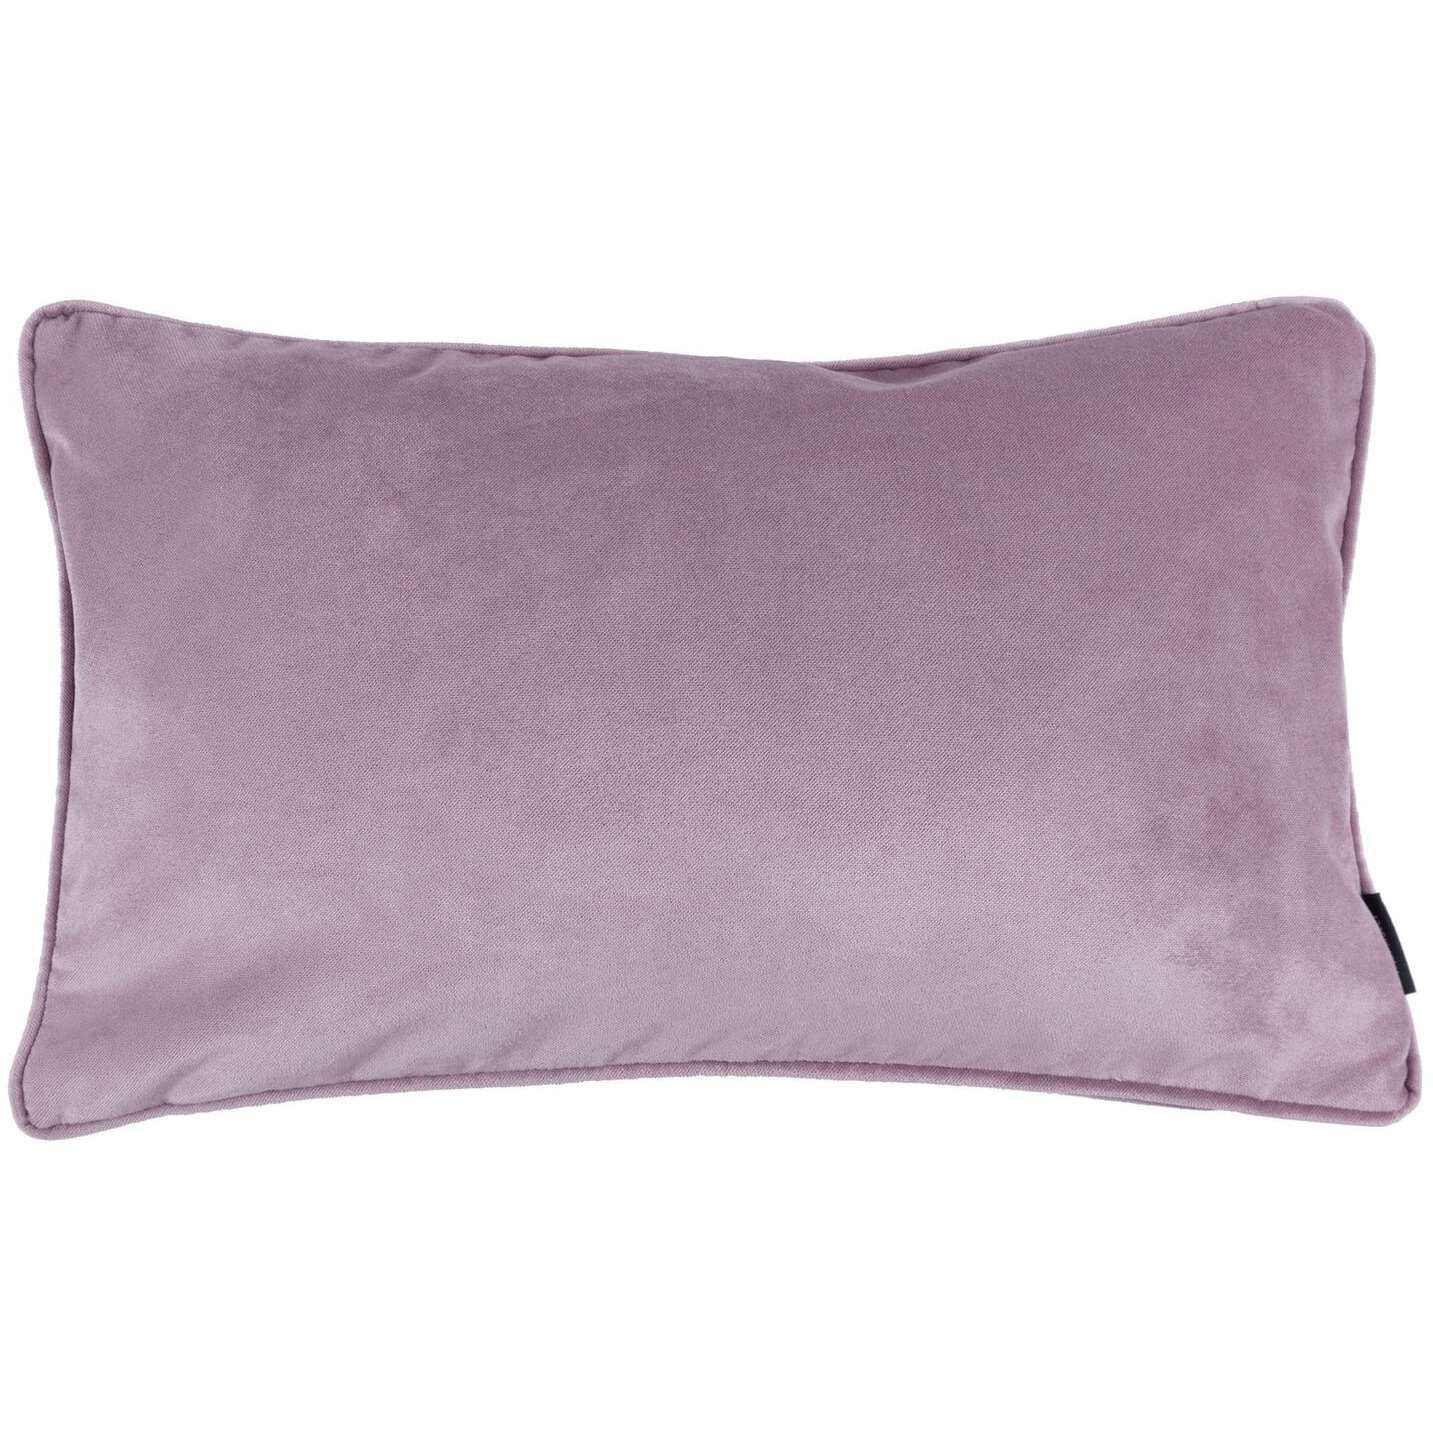 McAlister Textiles Matt Lilac Purple Piped Velvet Pillow Pillow Cover Only 50cm x 30cm 